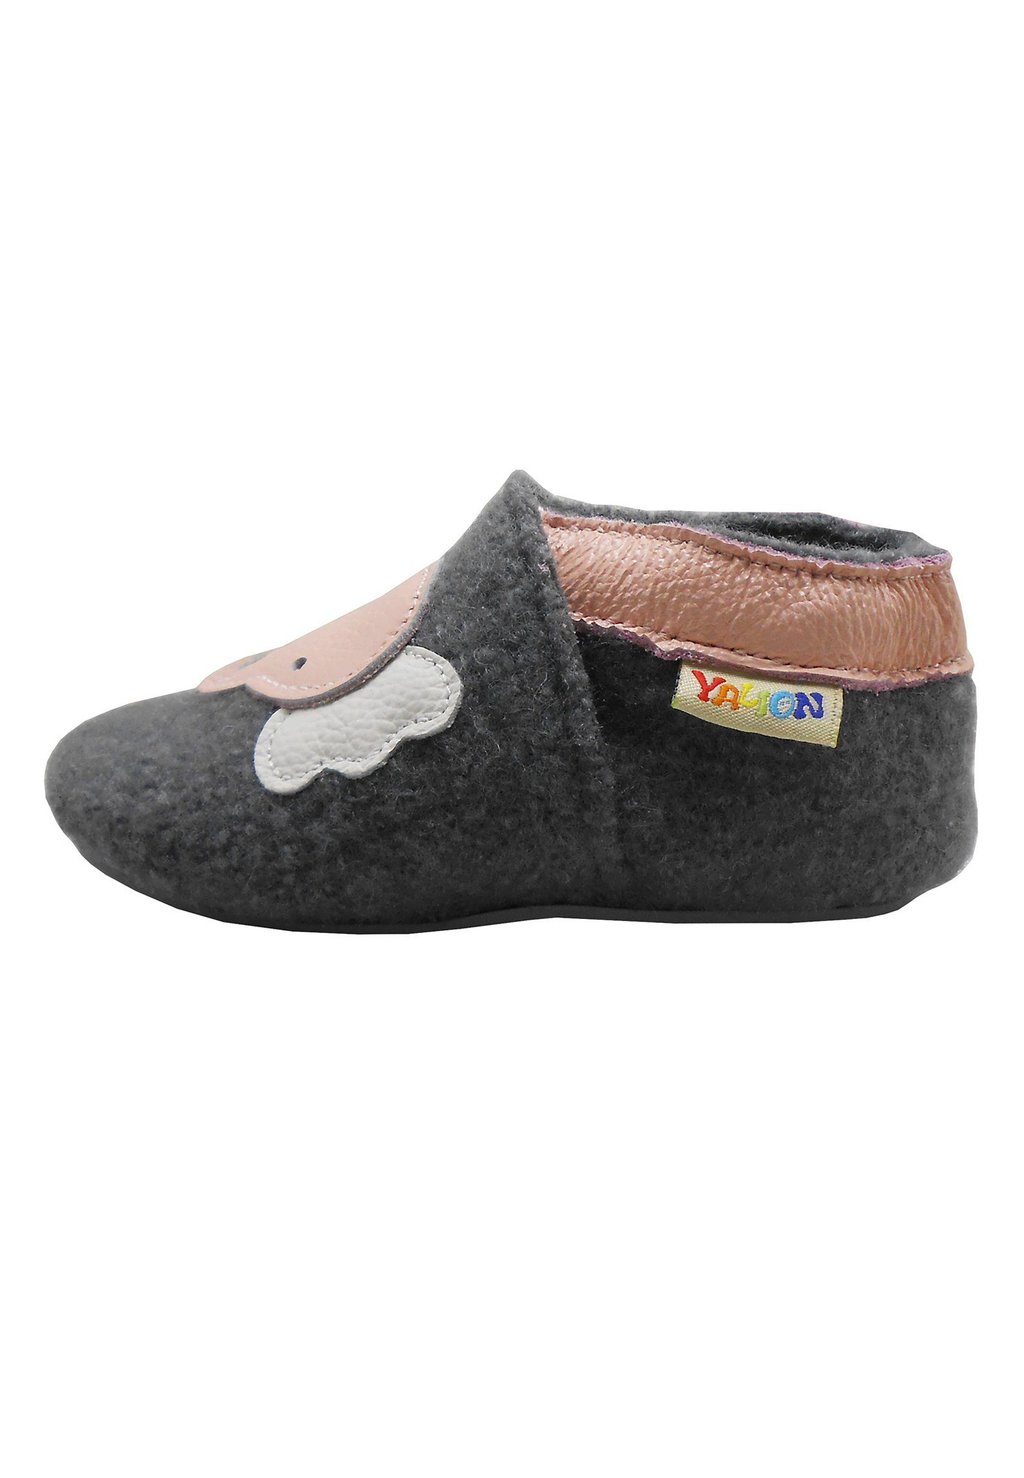 Обувь для ползания YALION KRABBEL ELEFANT, цвет elefant grau носки 3 pack yalion цвет elefant grau